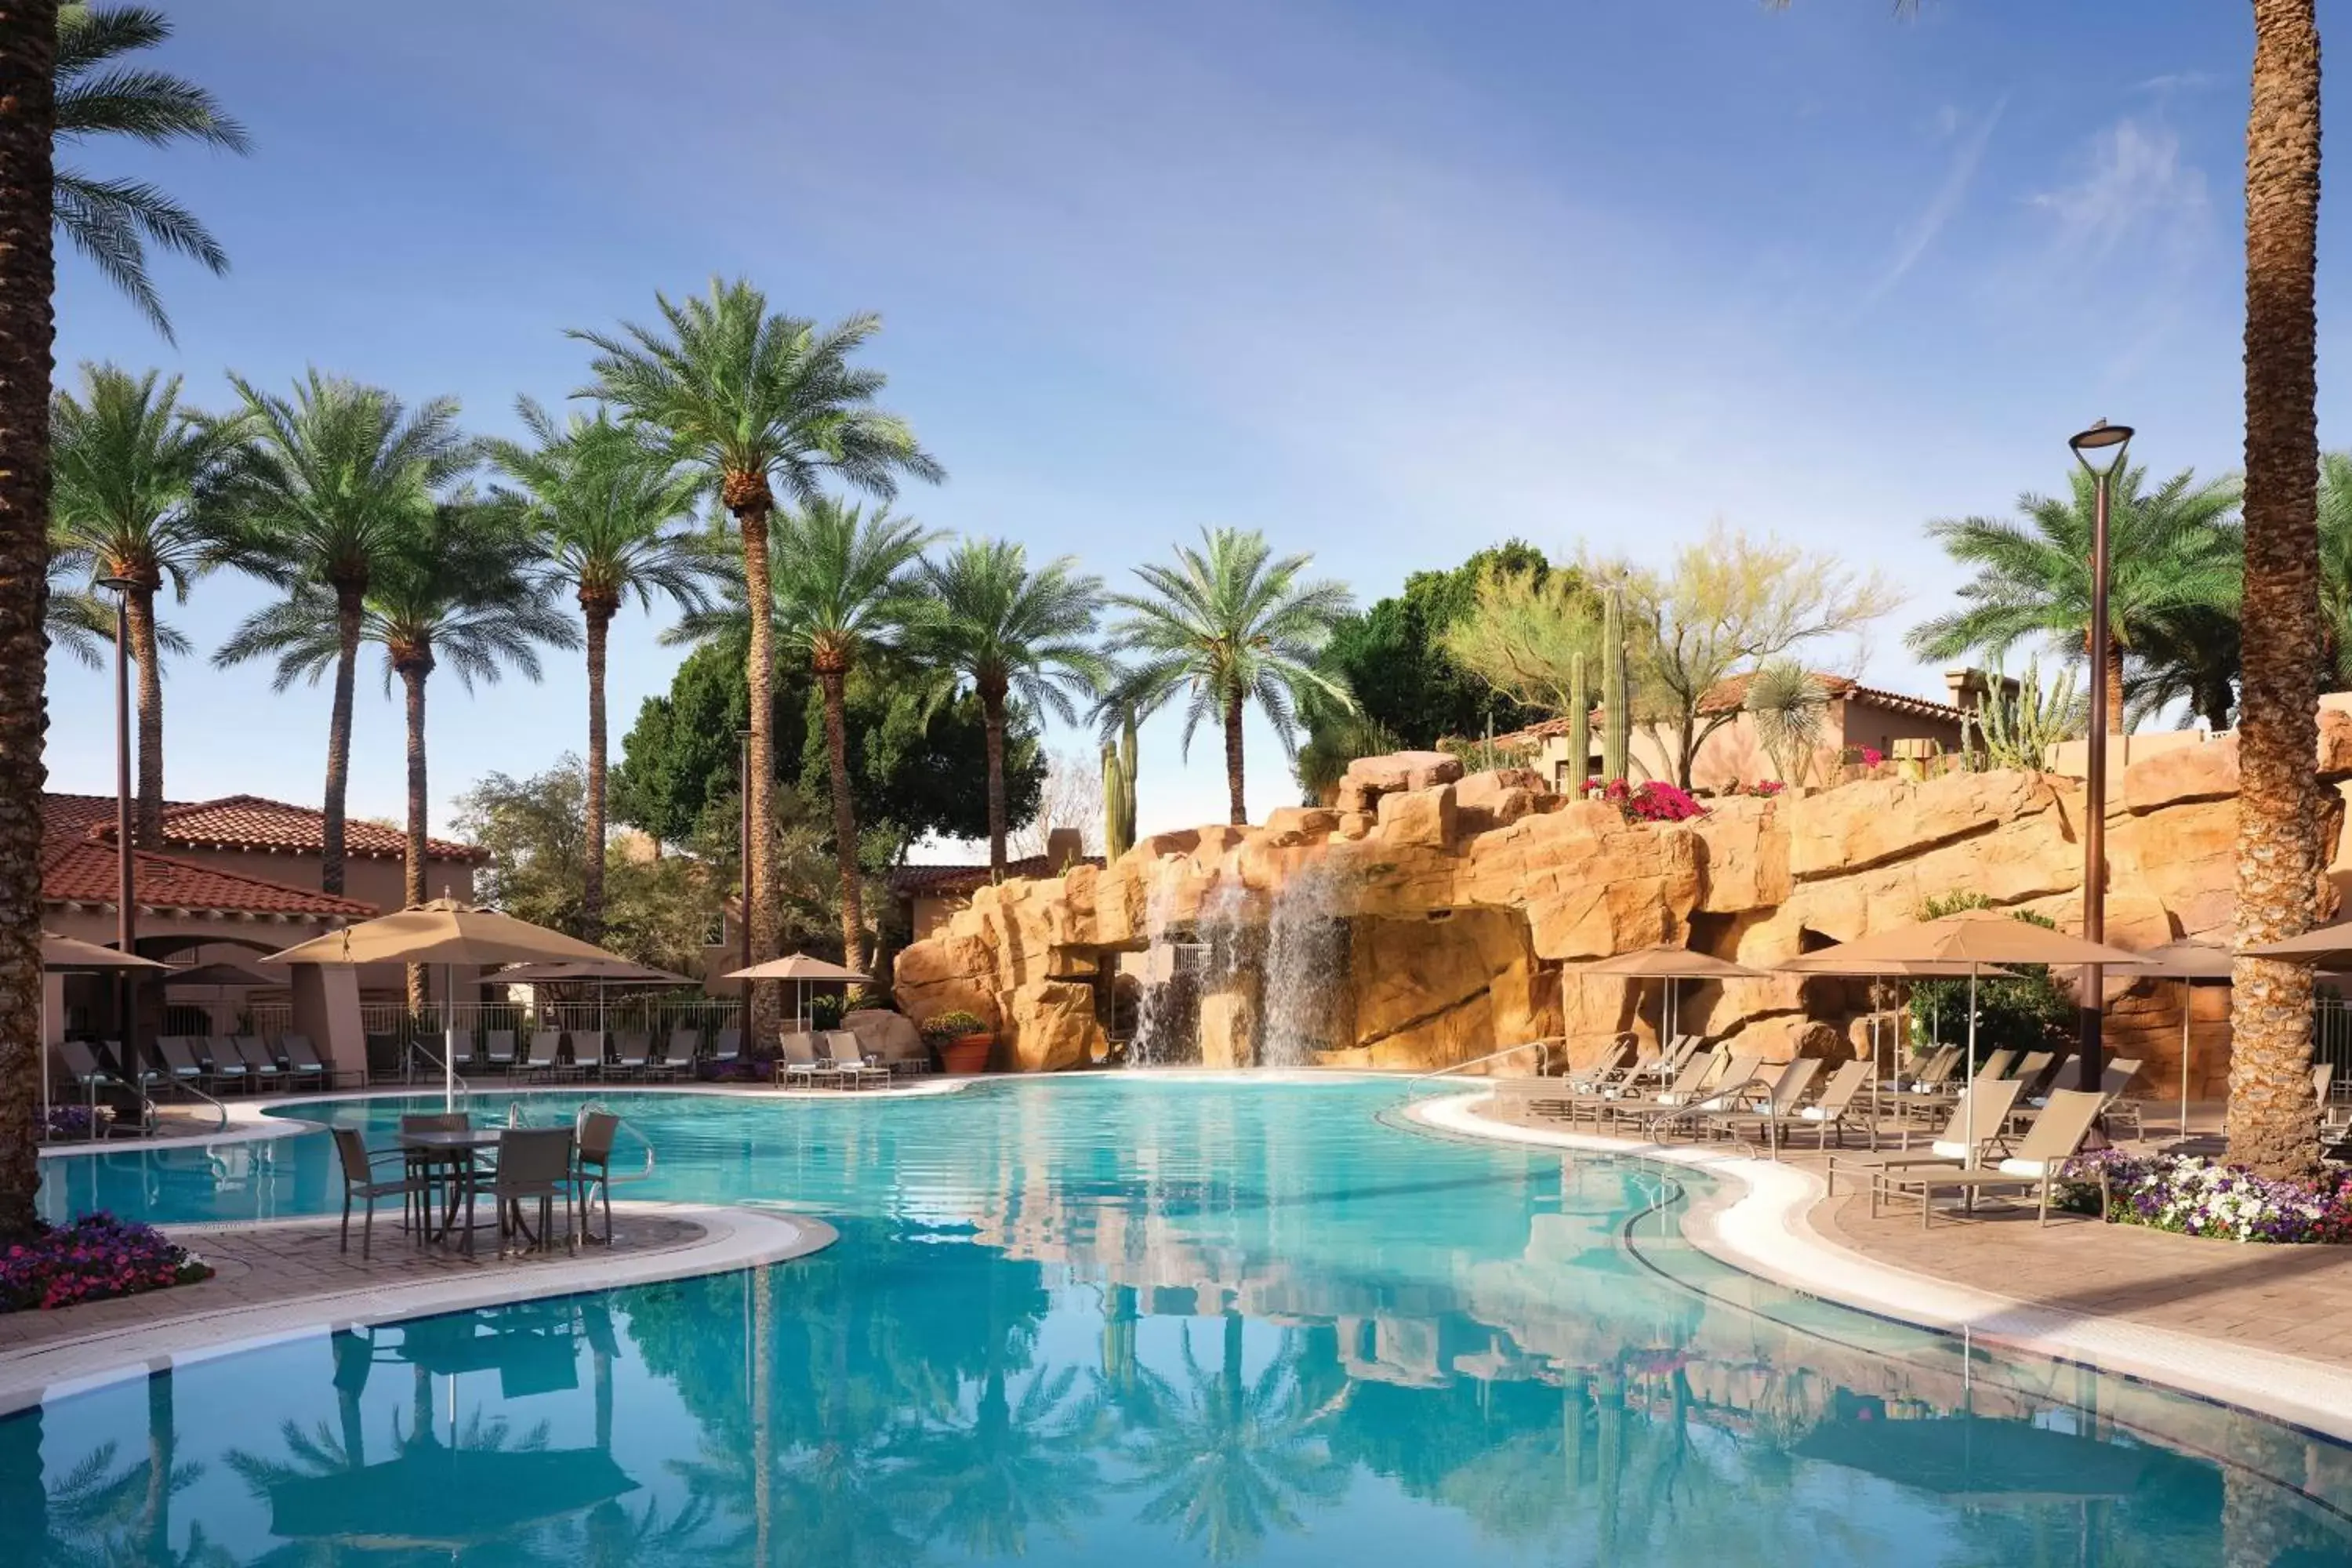 Swimming Pool in Sheraton Desert Oasis Villas, Scottsdale